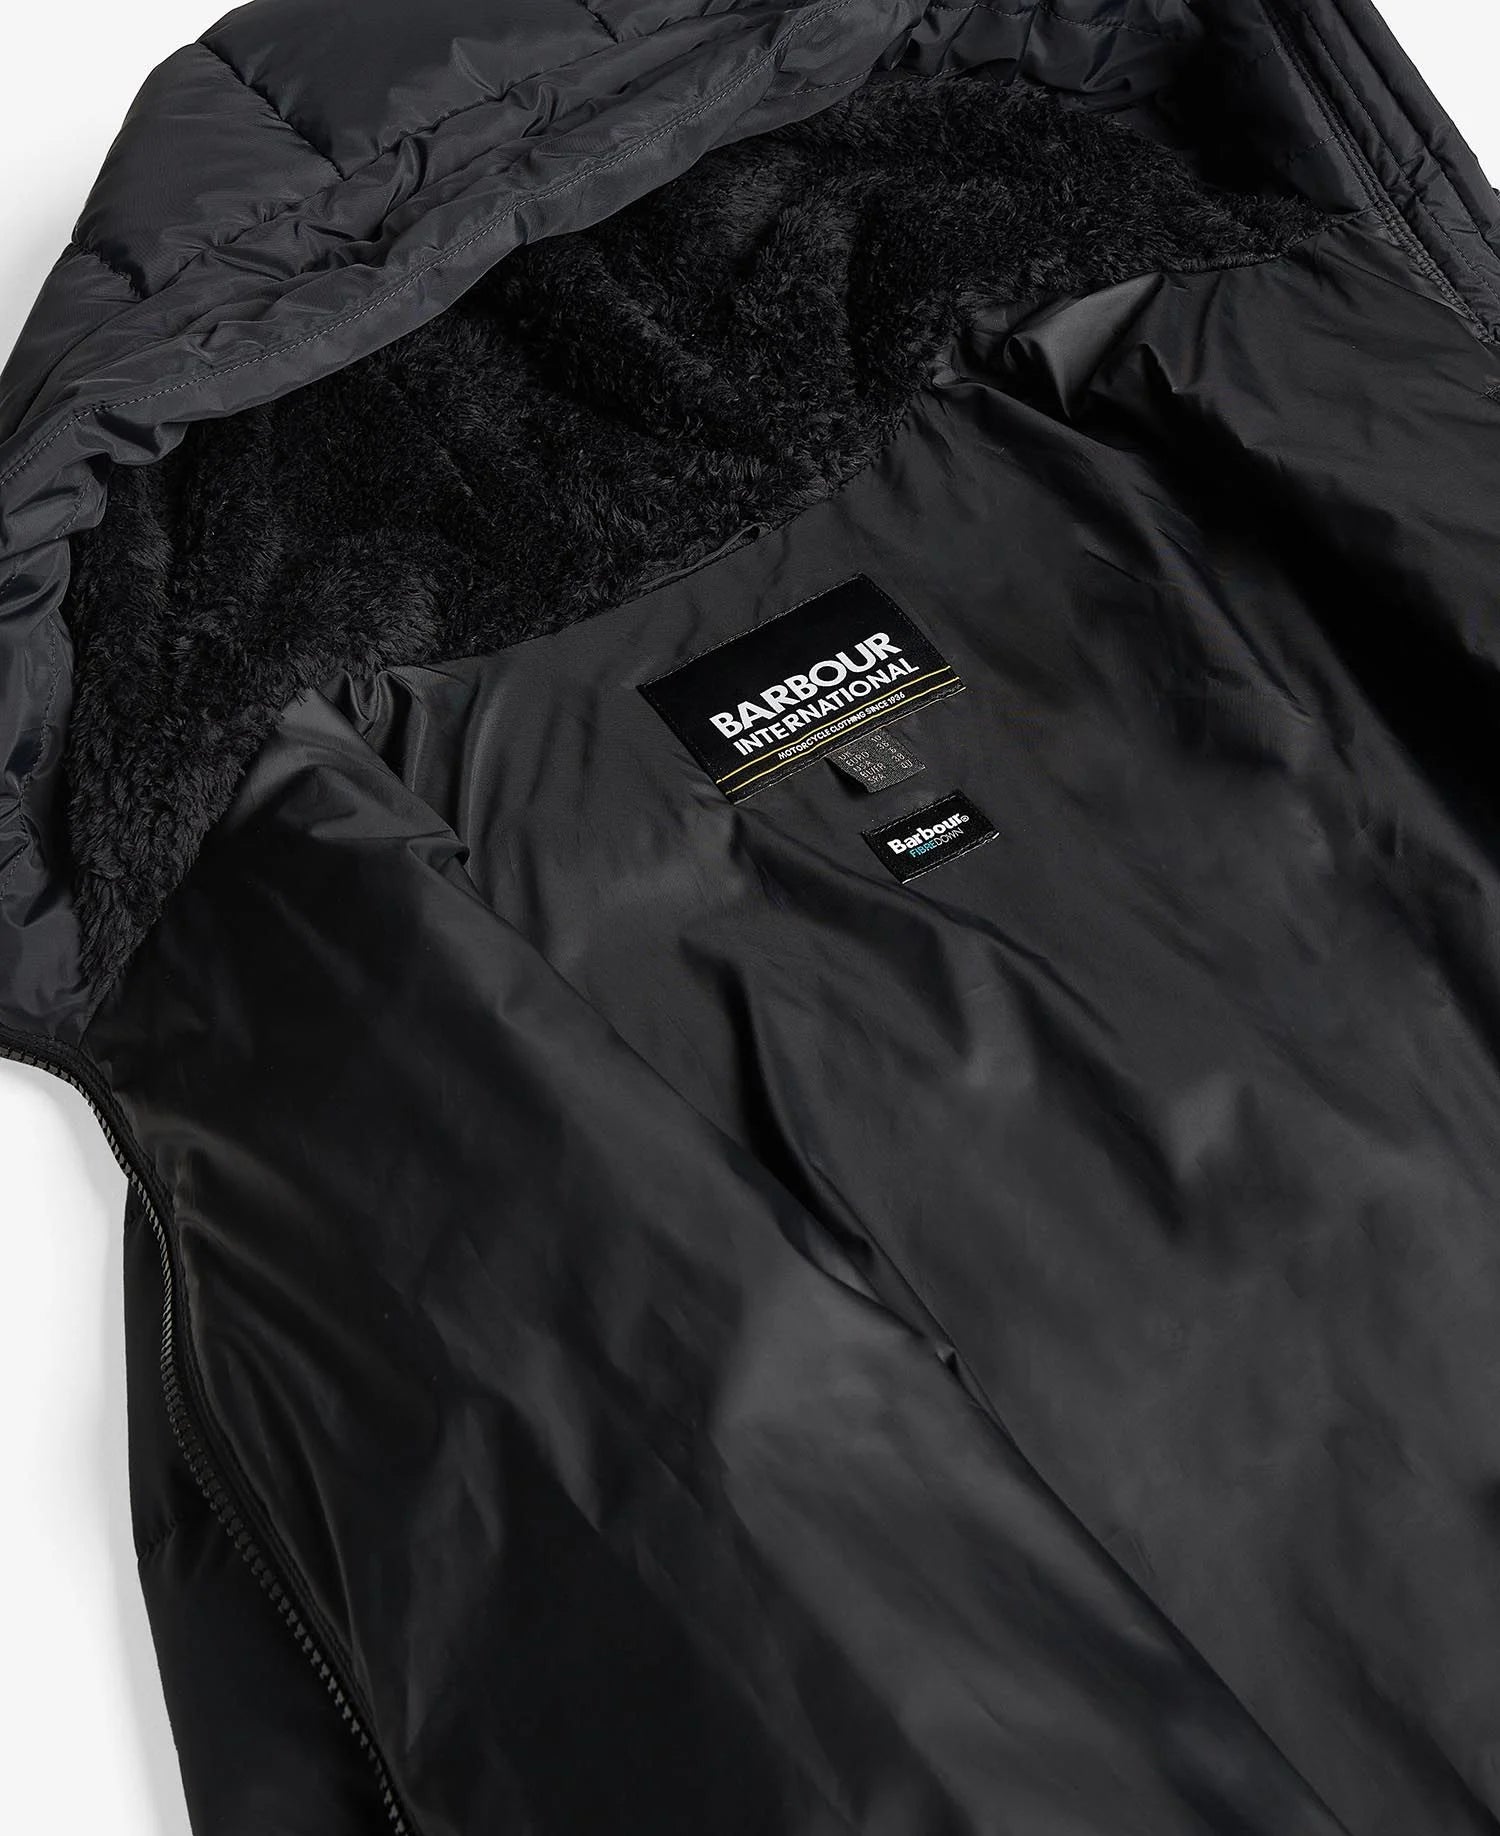 Barbour International Boston Lonline Quilted Jacket Black